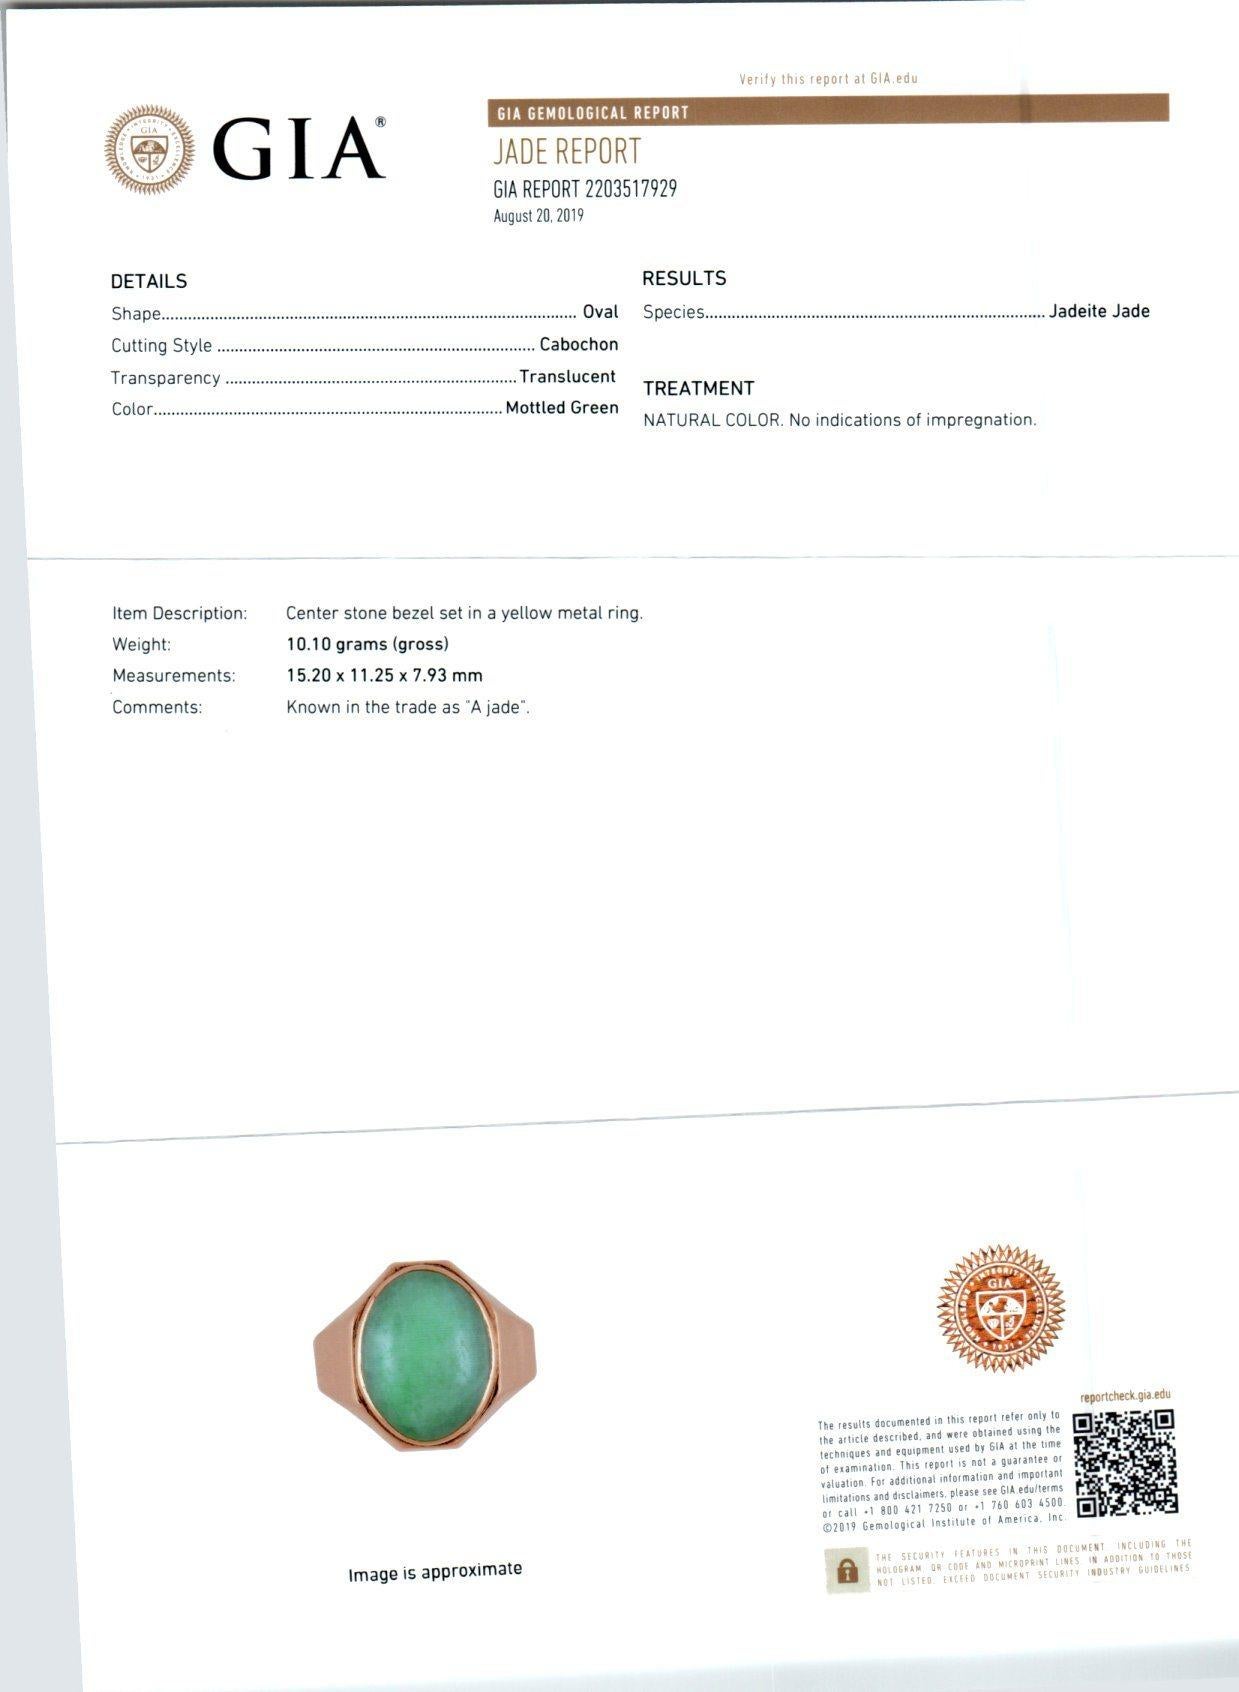 Bague unisexe en or rose et jadéite ovale certifiée GIA en vente 2